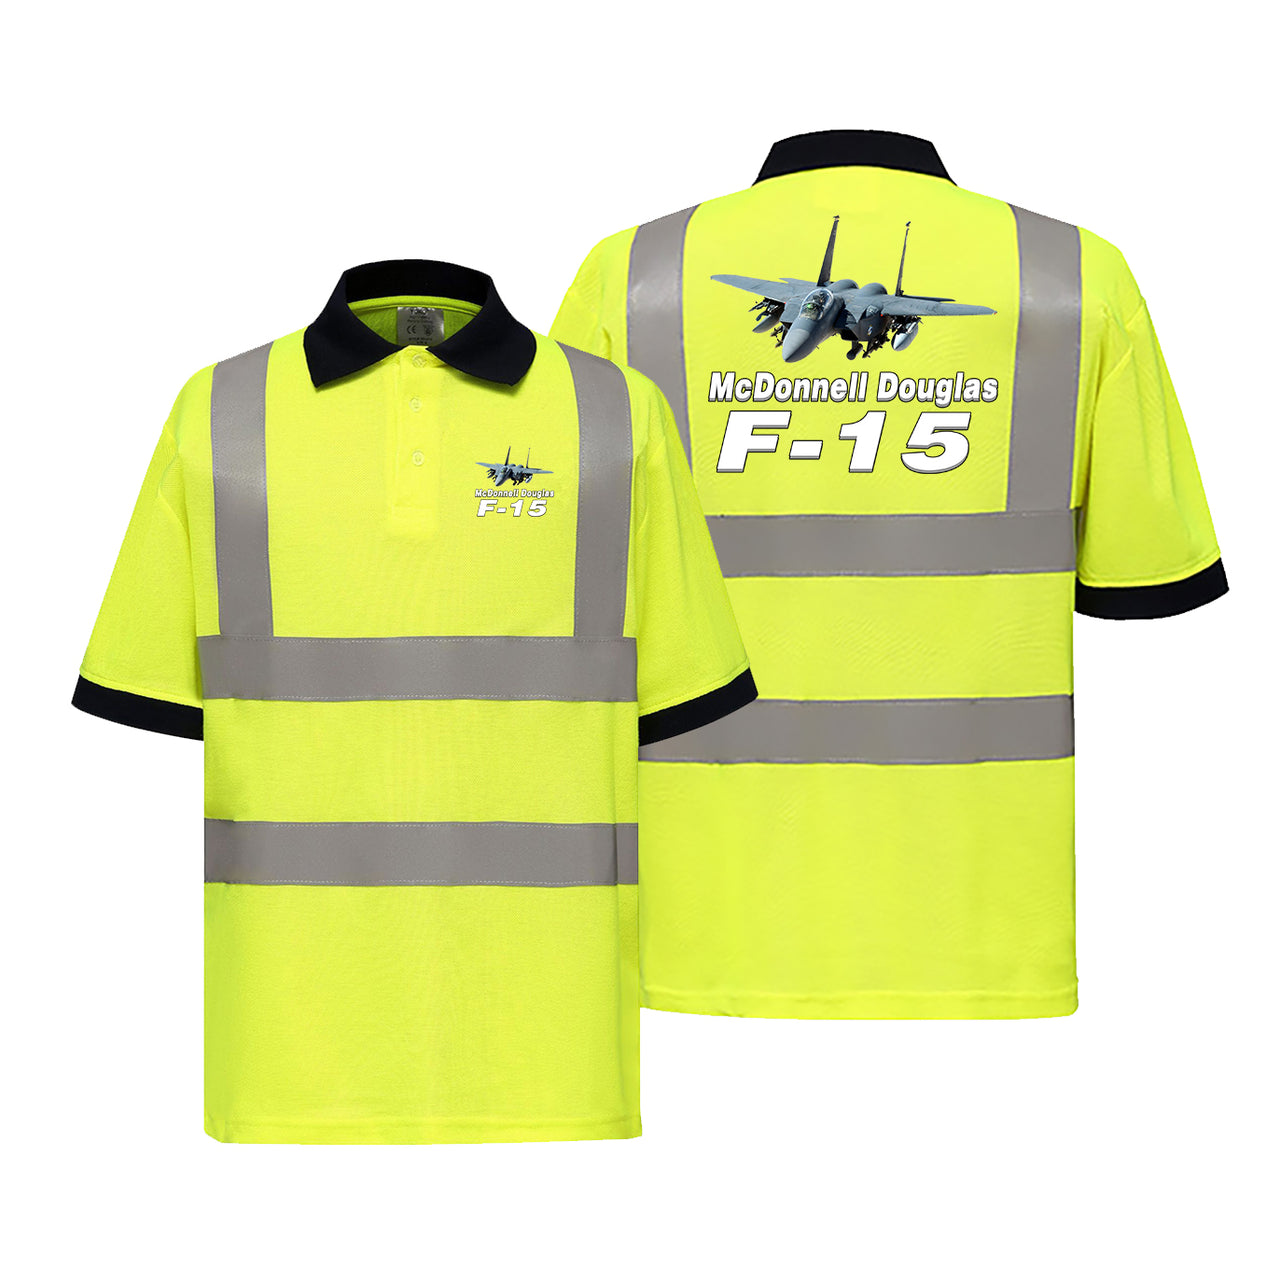 The McDonnell Douglas F15 Designed Reflective Polo T-Shirts